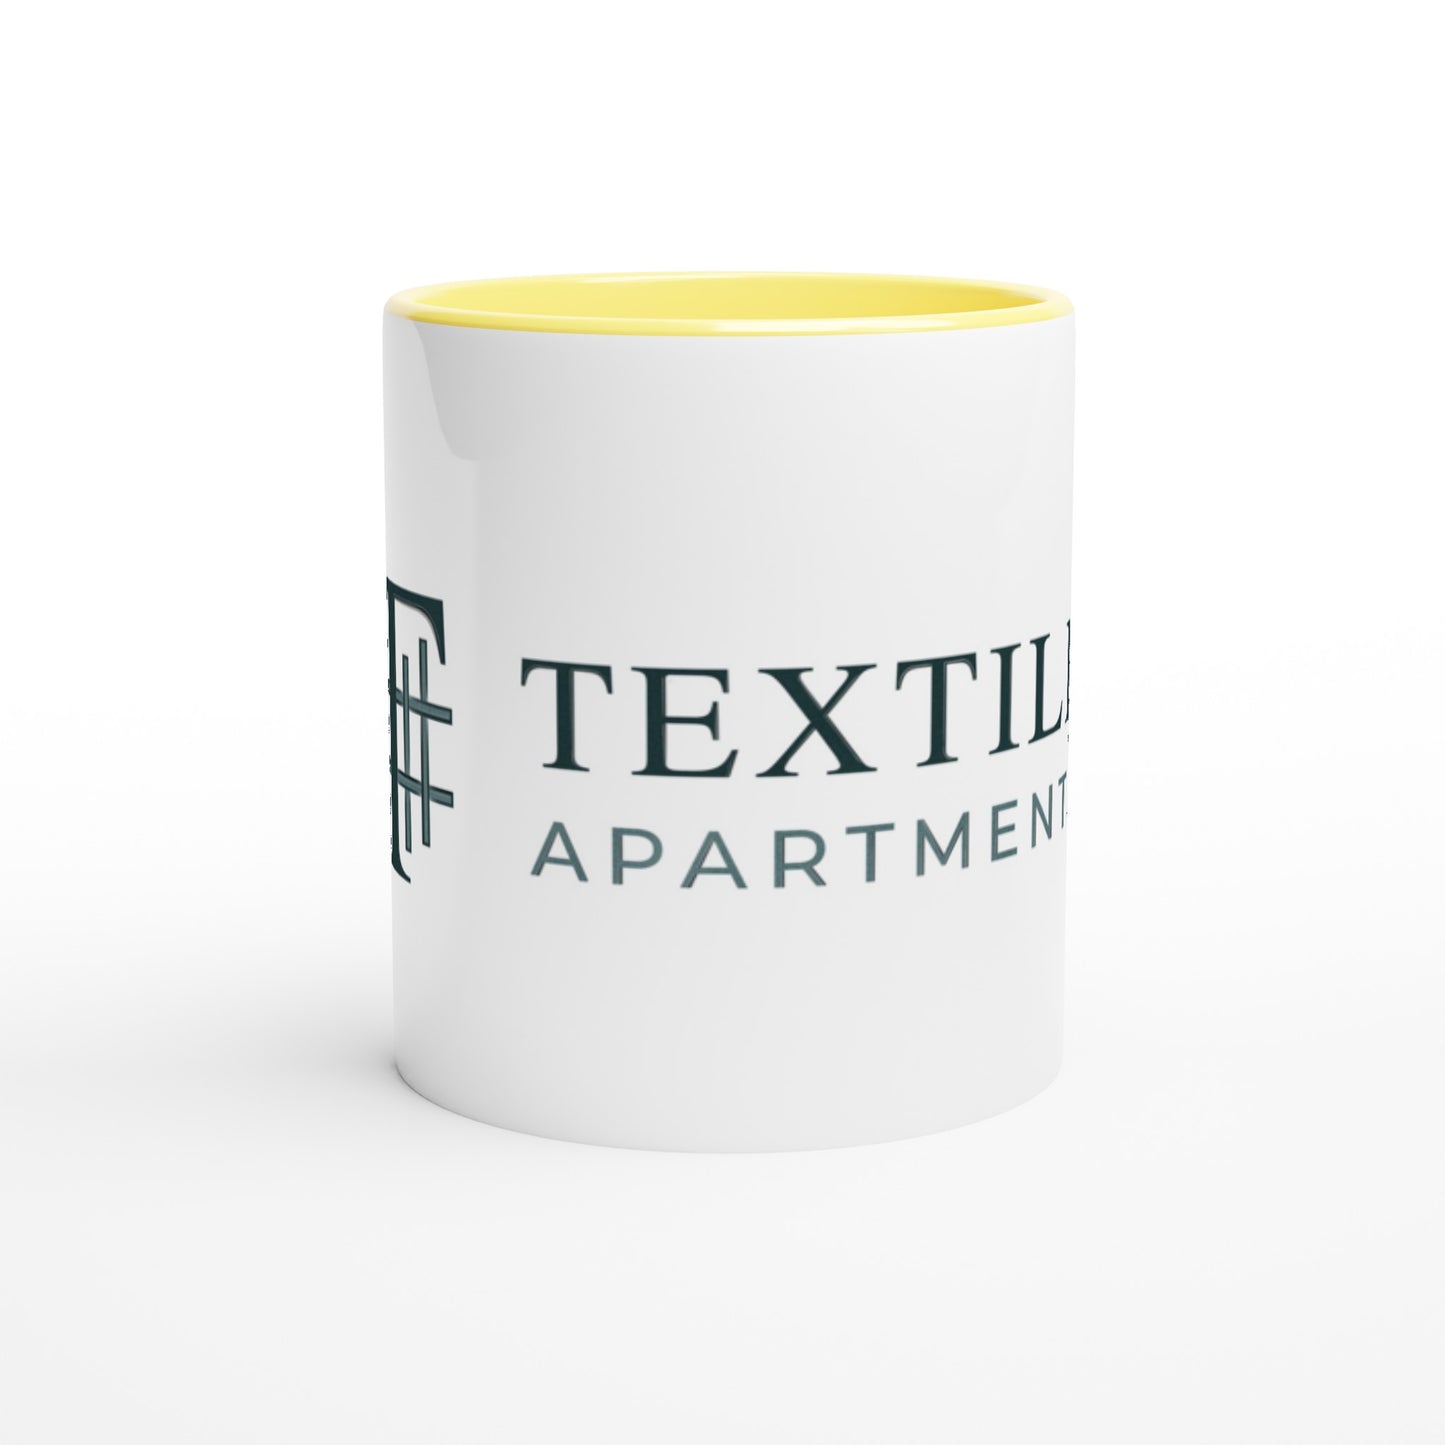 Textile Apartments - White 11oz Ceramic Mug with Color Inside